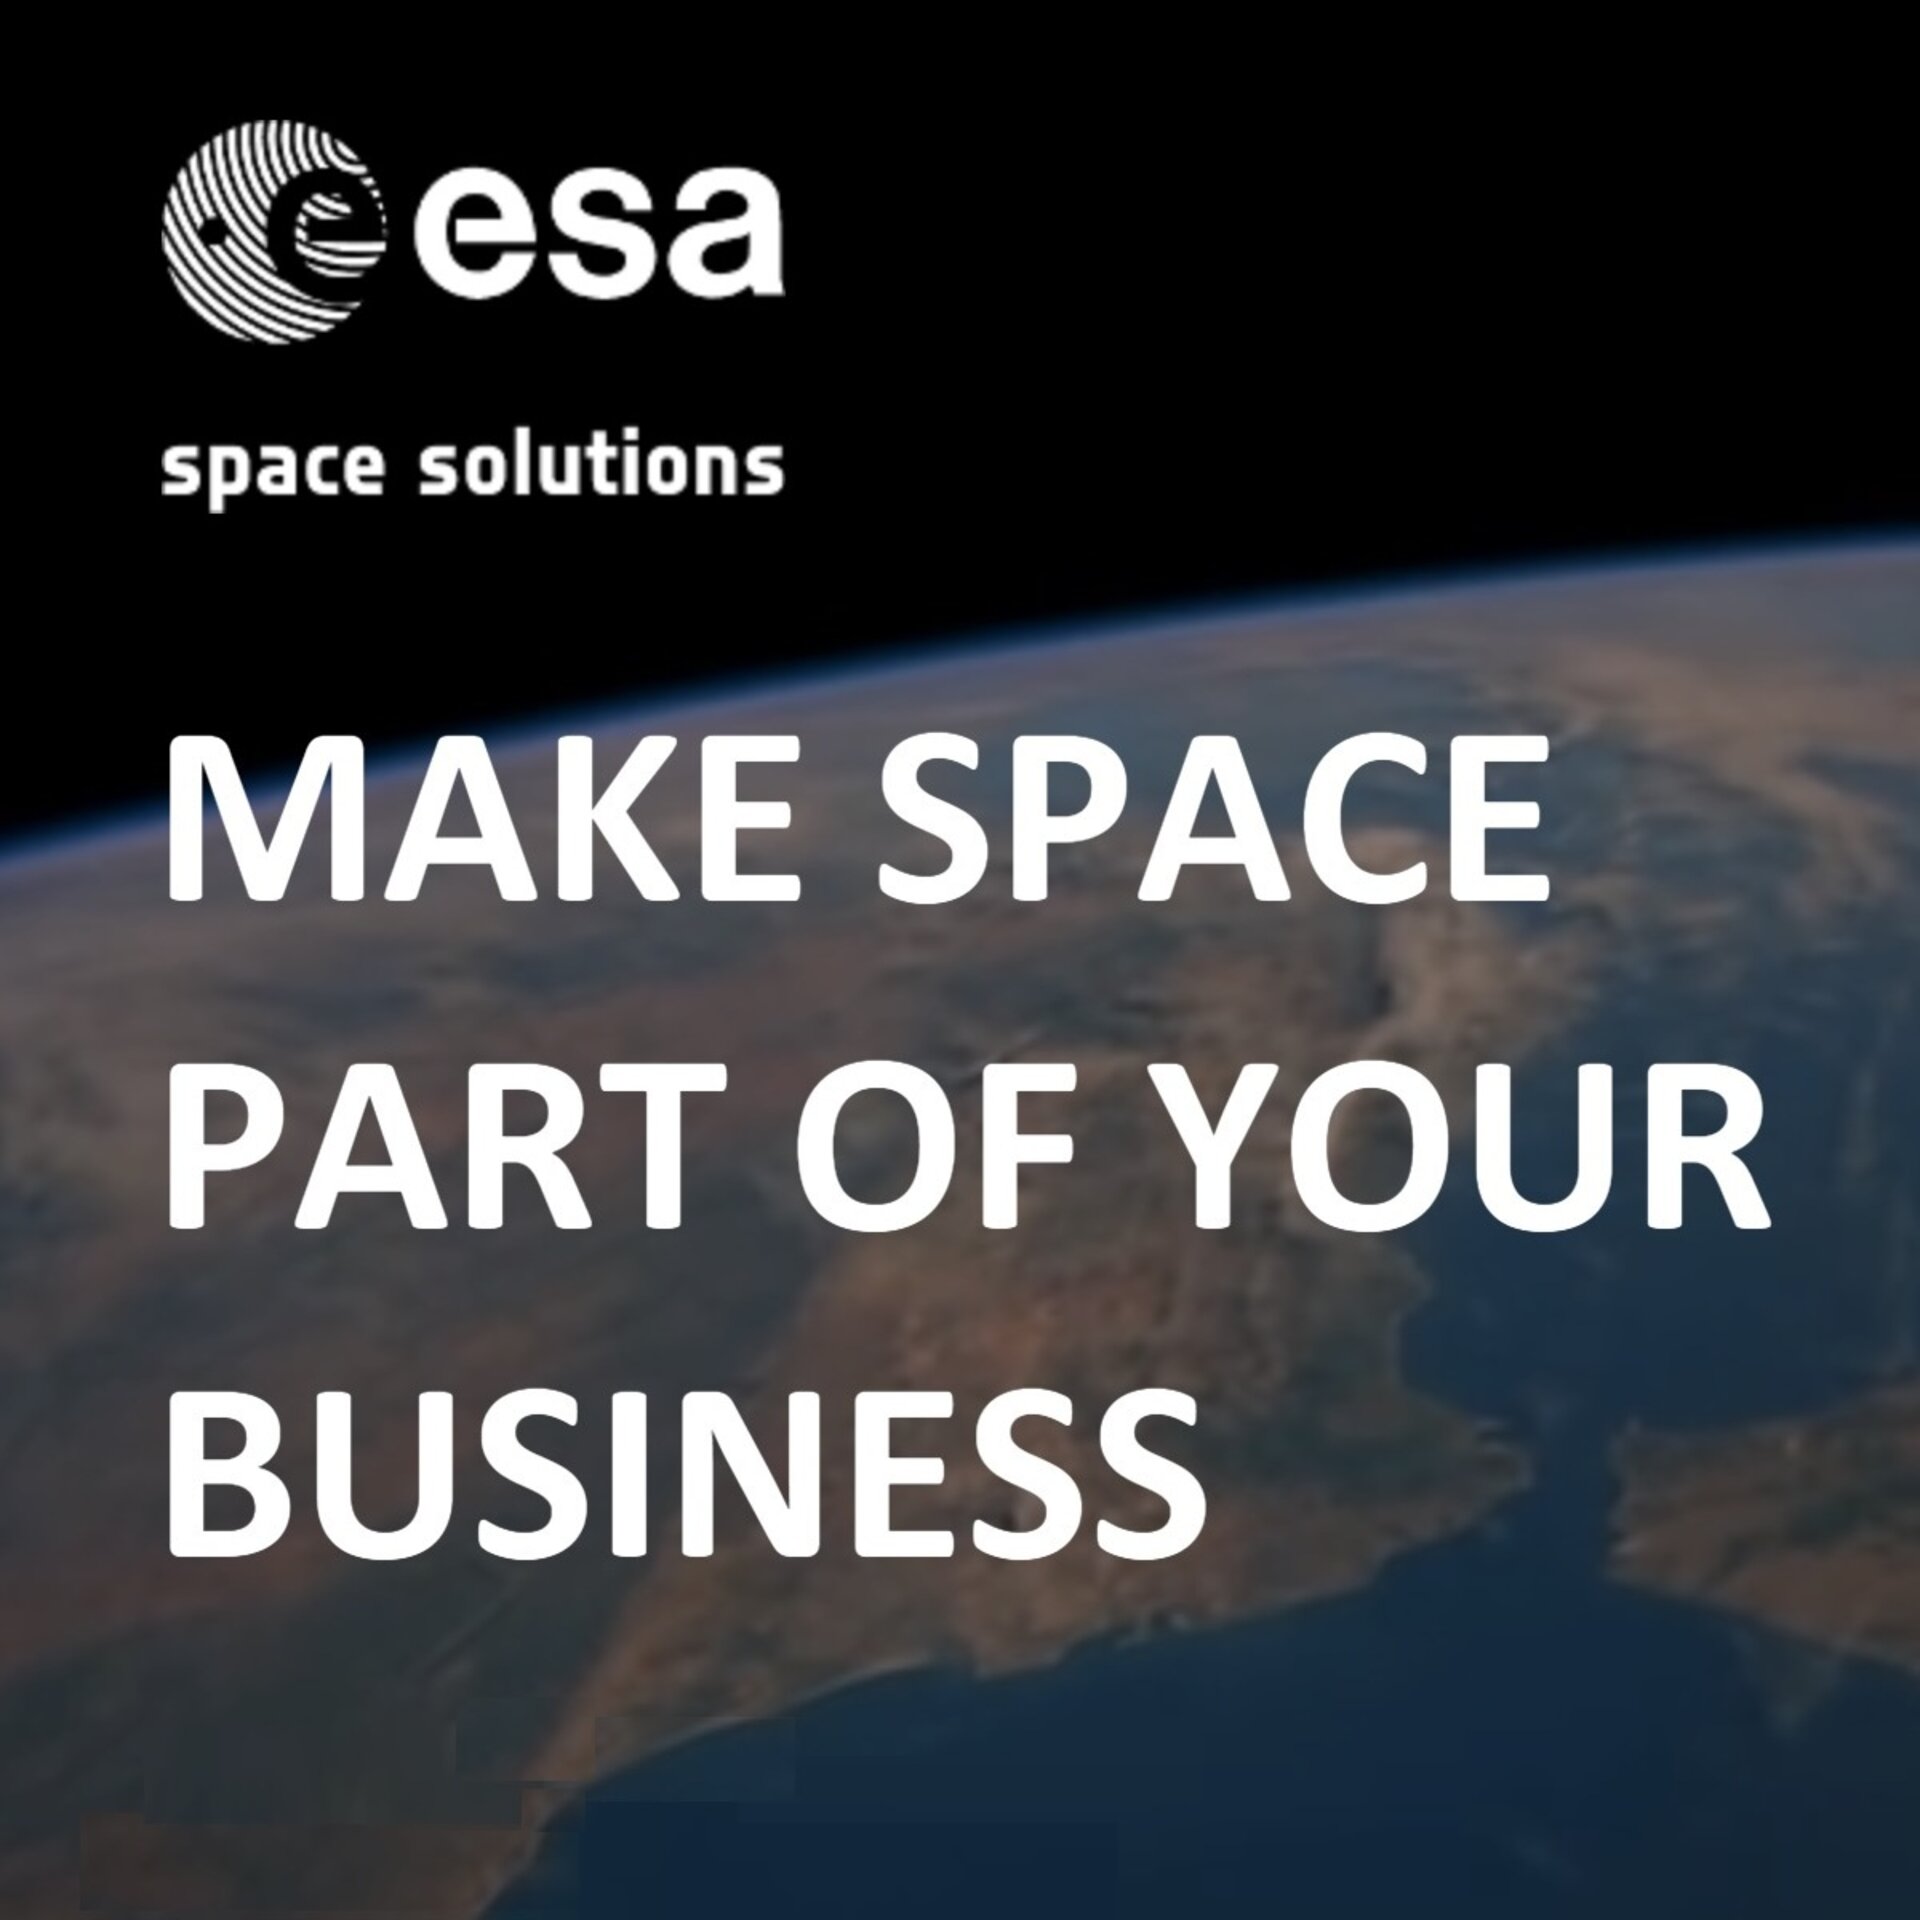 ESA space solutions website